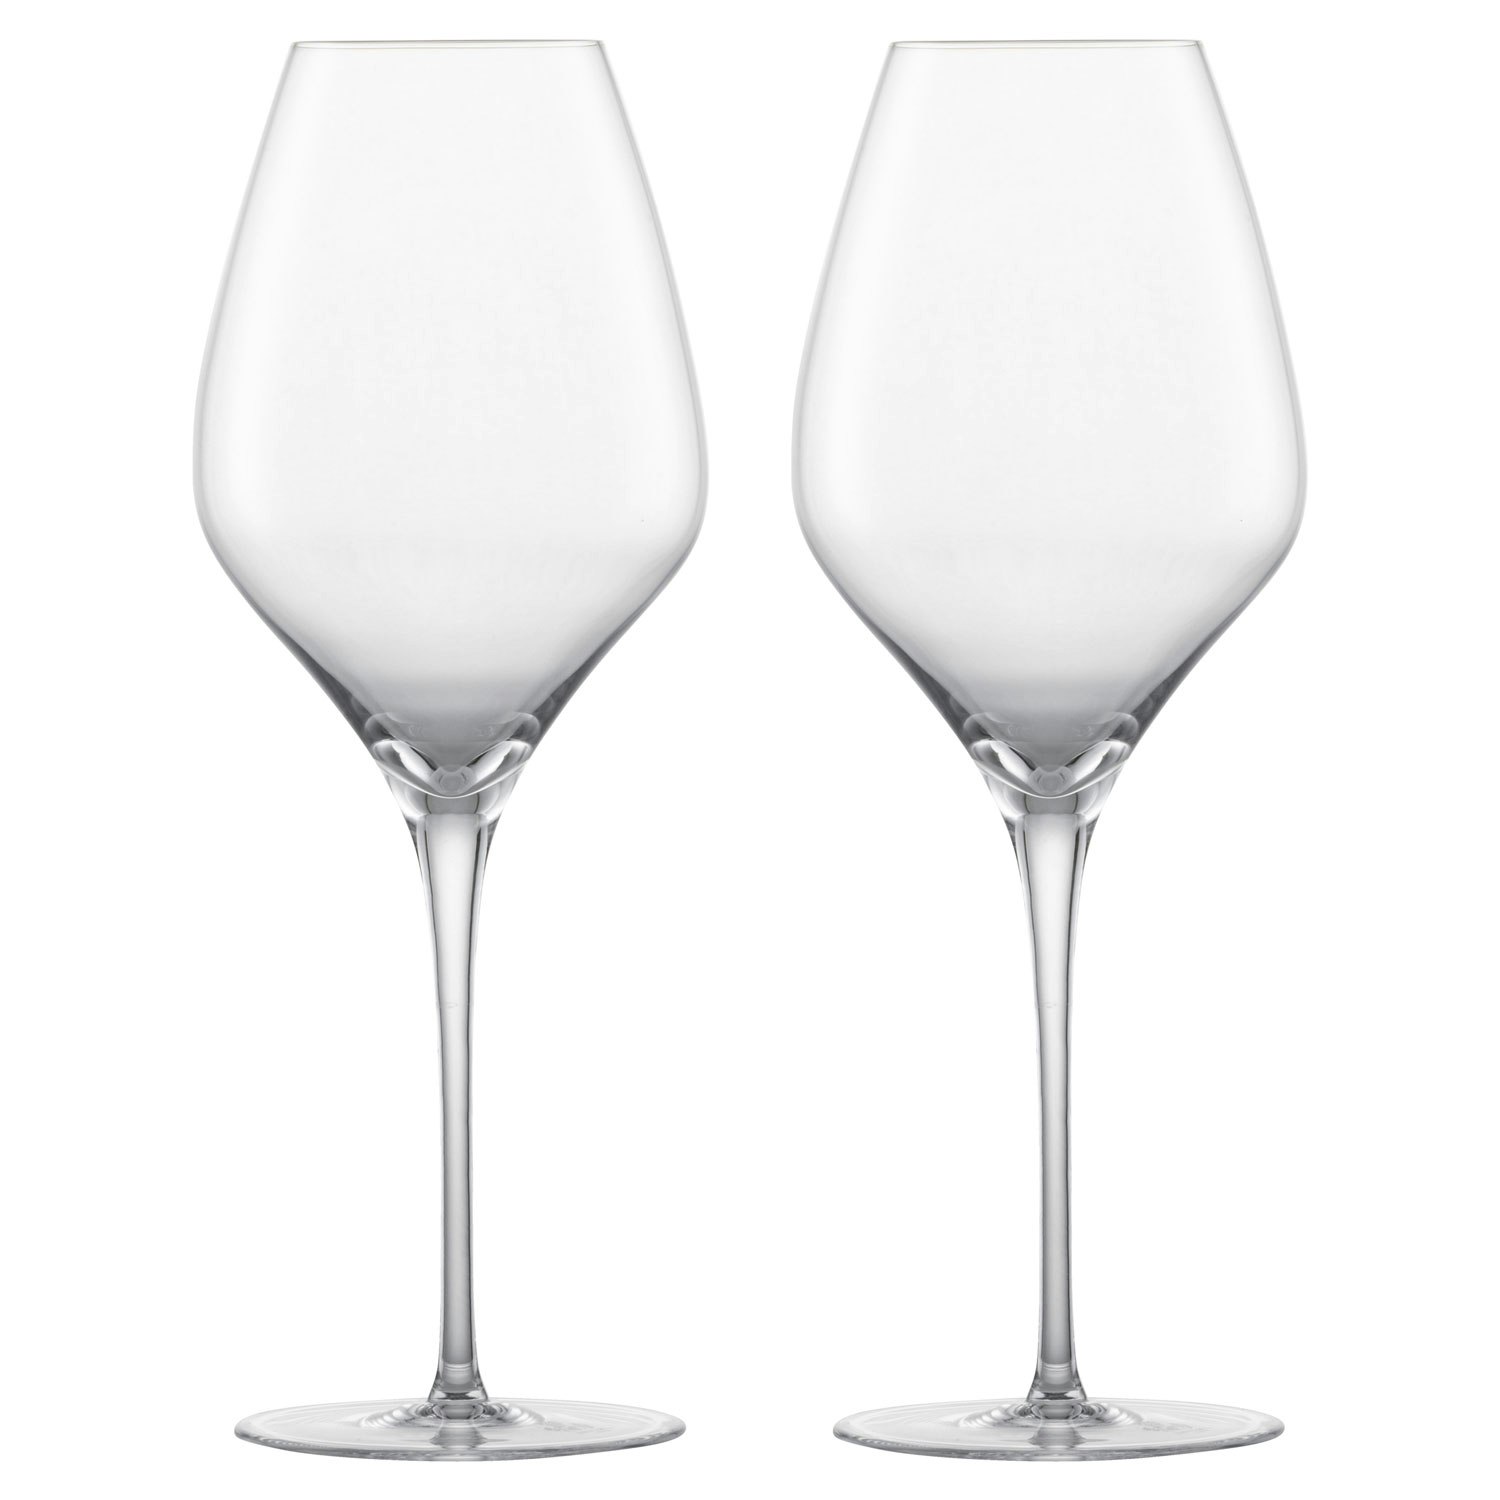 https://royaldesign.com/image/2/zweisel-alloro-wine-glass-50-cl-2-pack-0